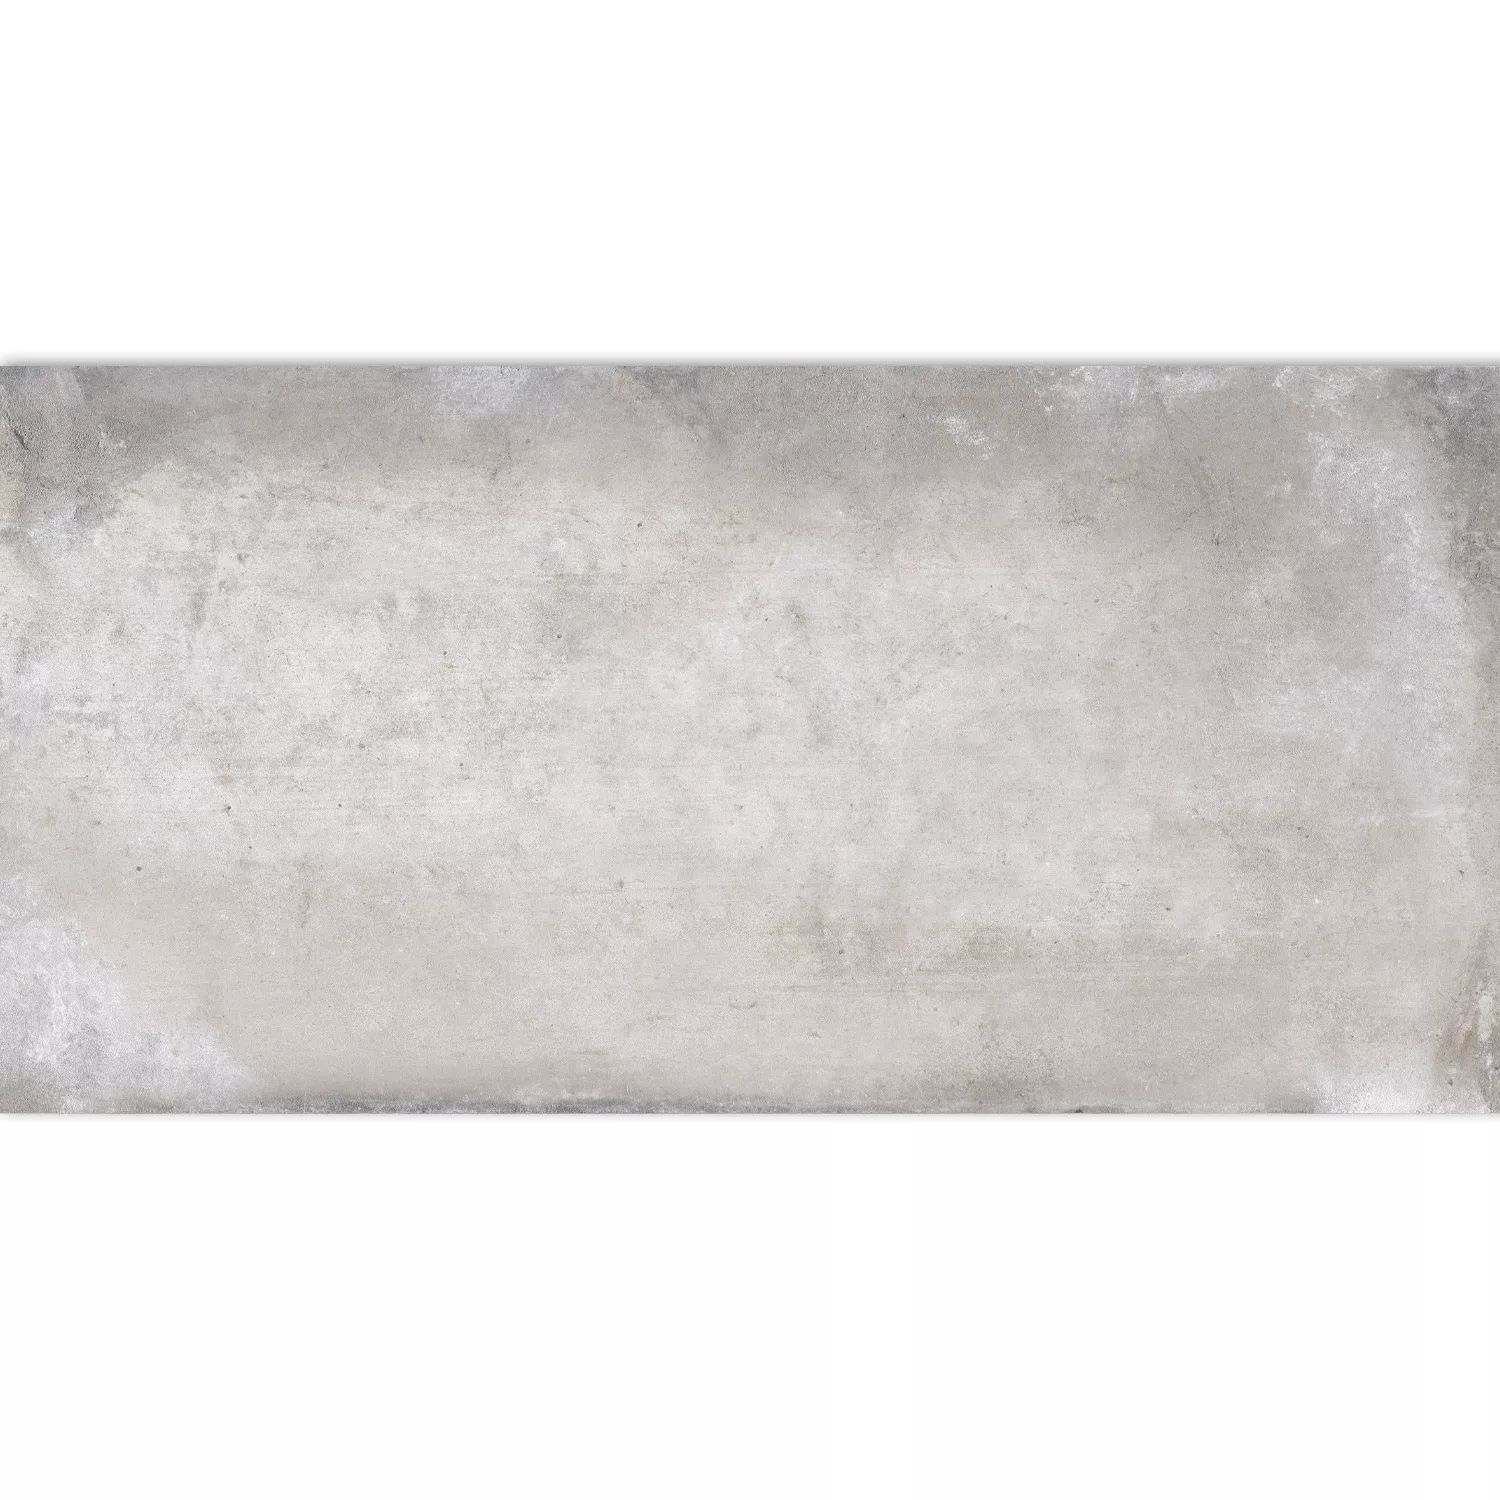 Próbka Płytki Podłogowe Cement Optyka Maryland Szary 30x60cm